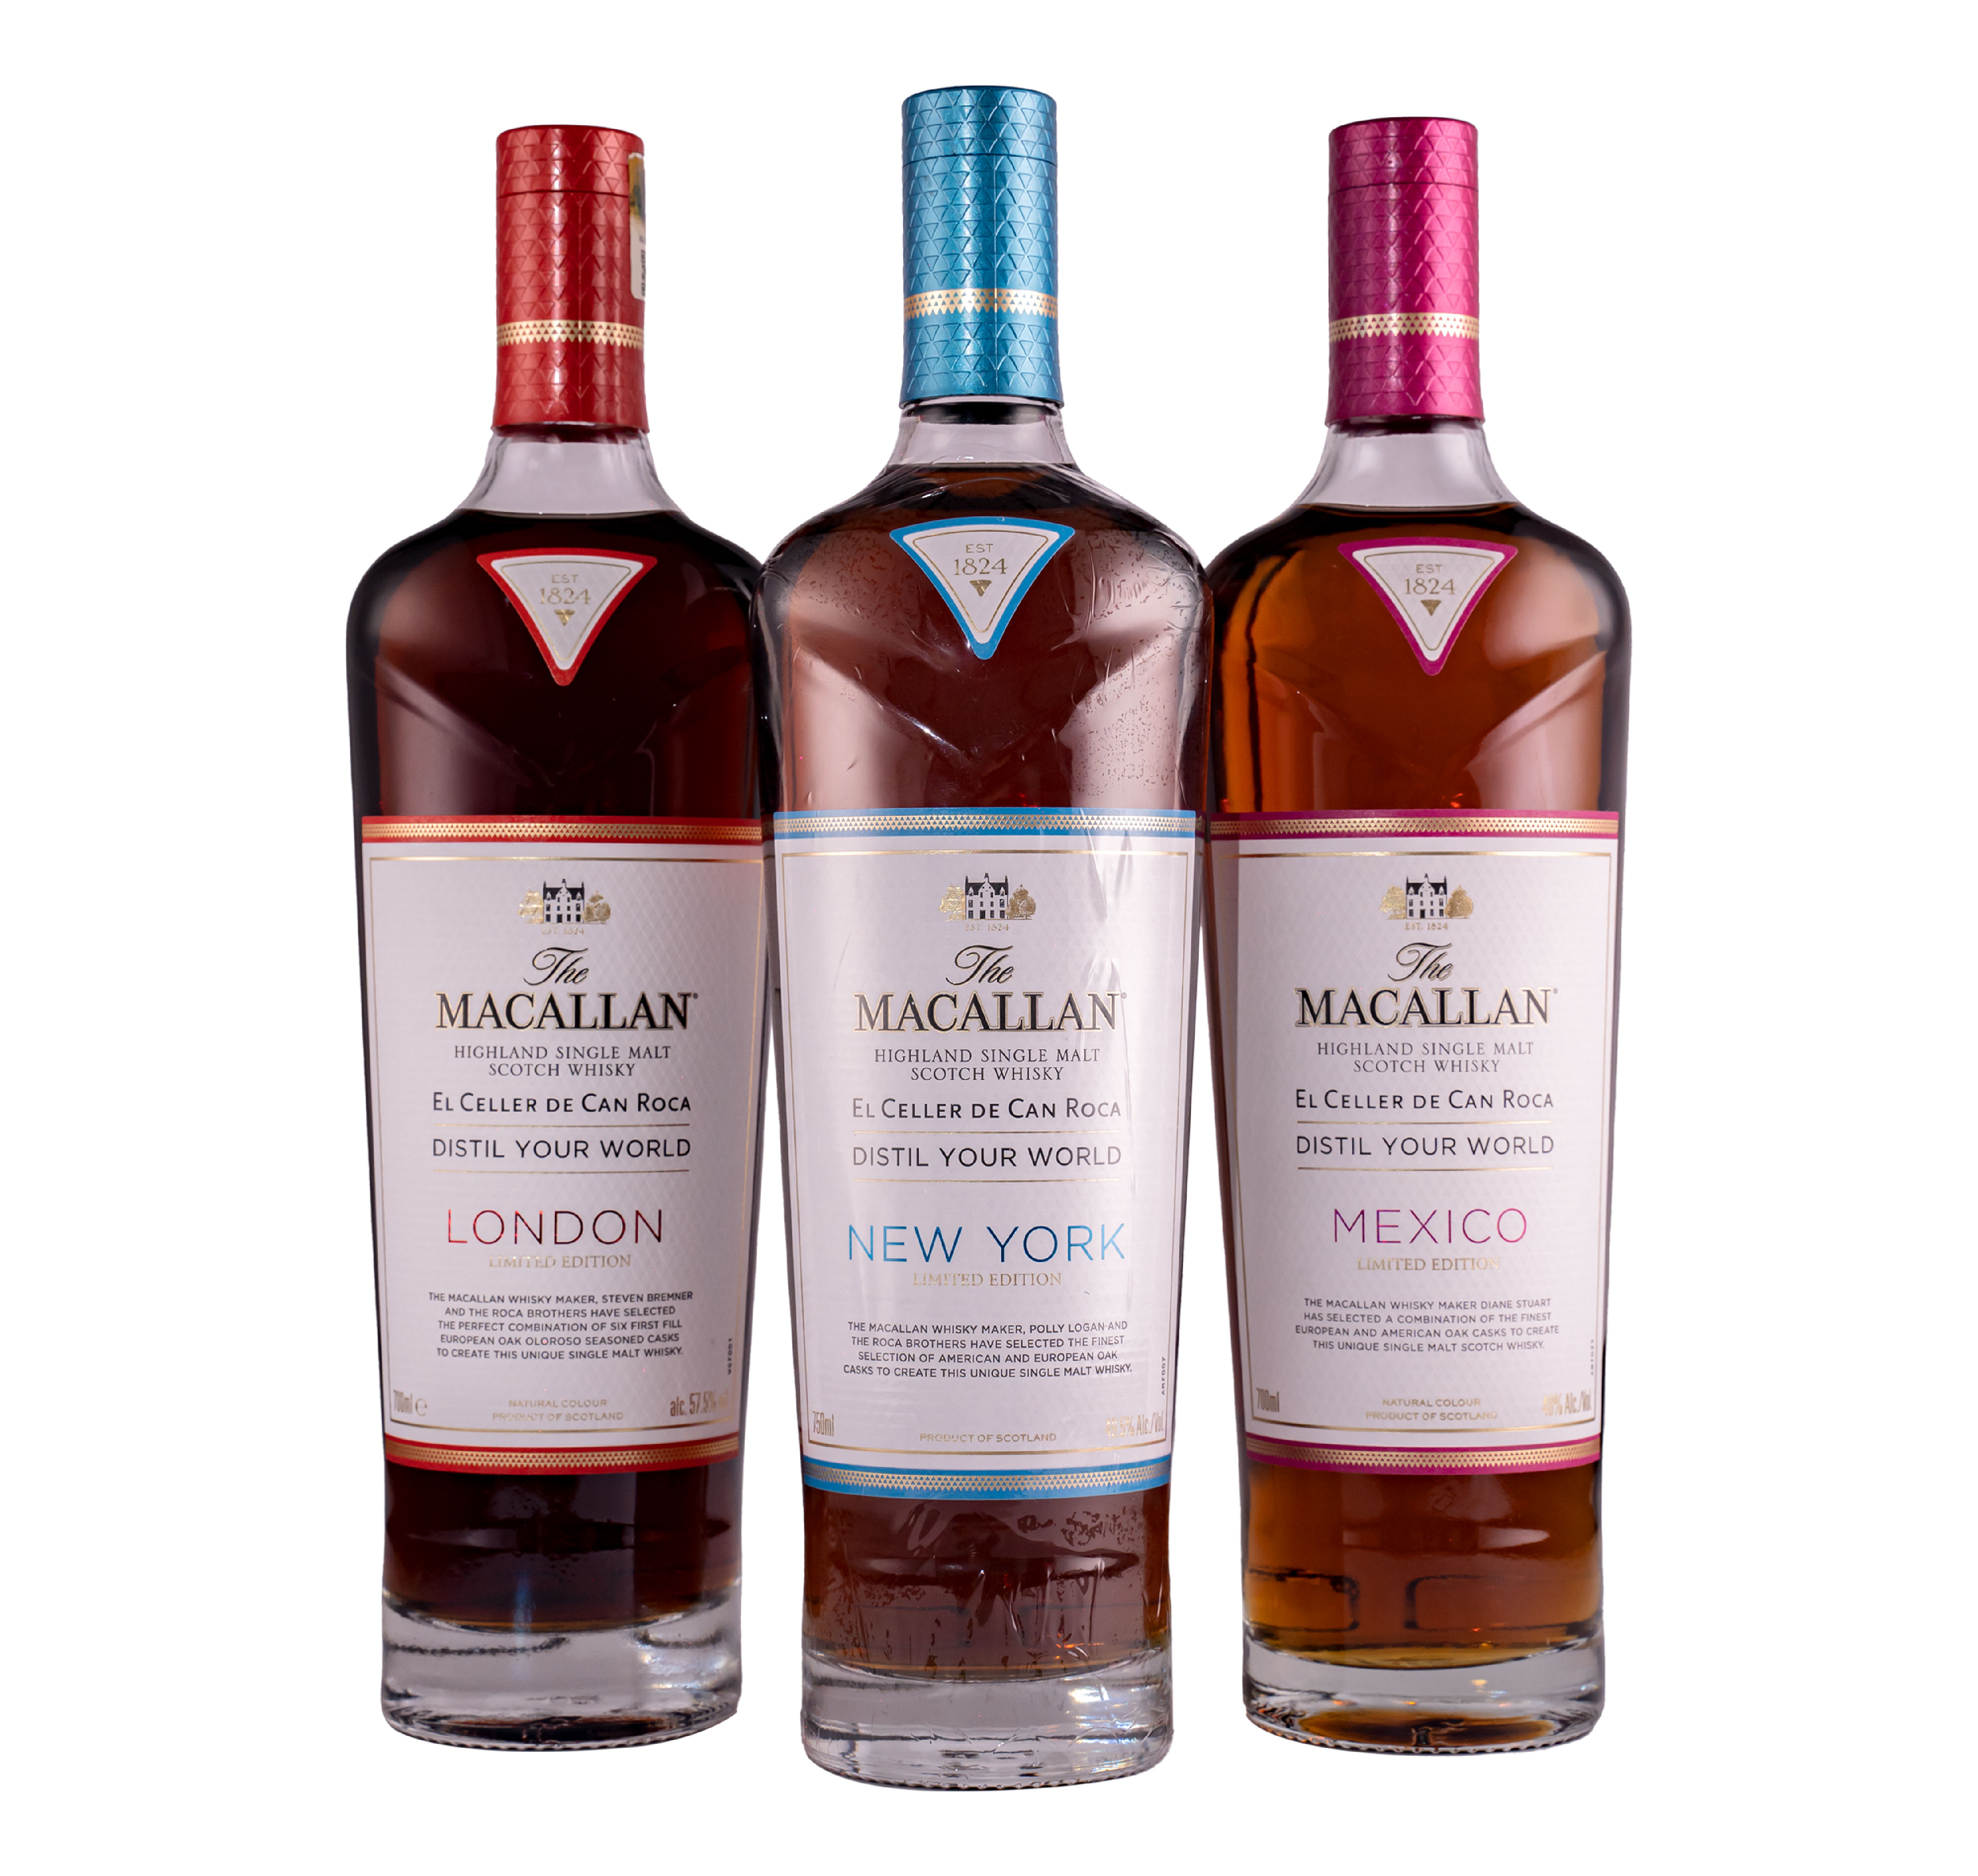 The Macallan Highland Single Malt Scotch Whisky Distil Your World